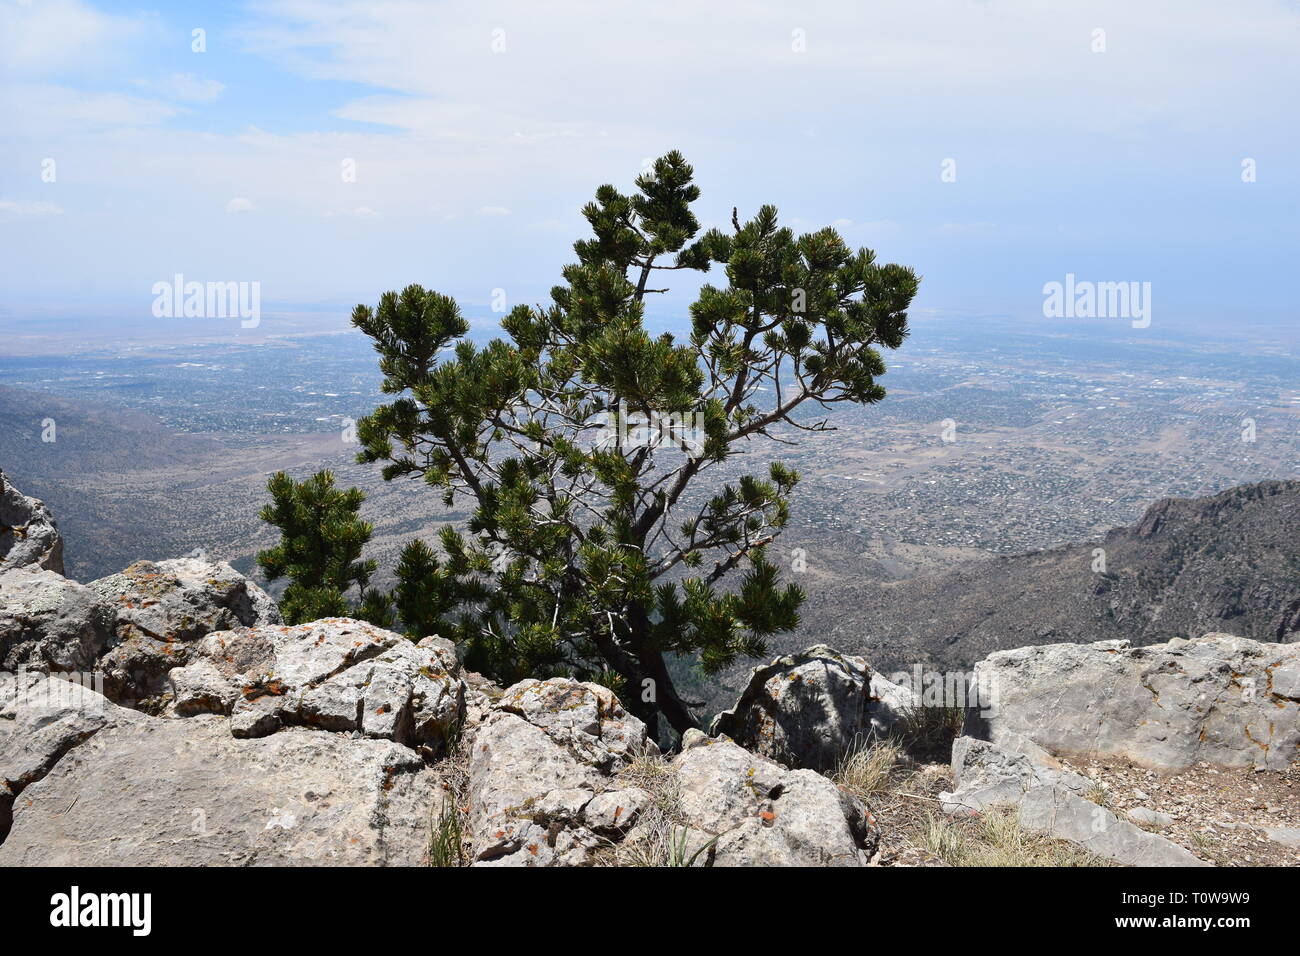 Views from the top of Sandia Peak in Albuquerque, NM Stock Photo